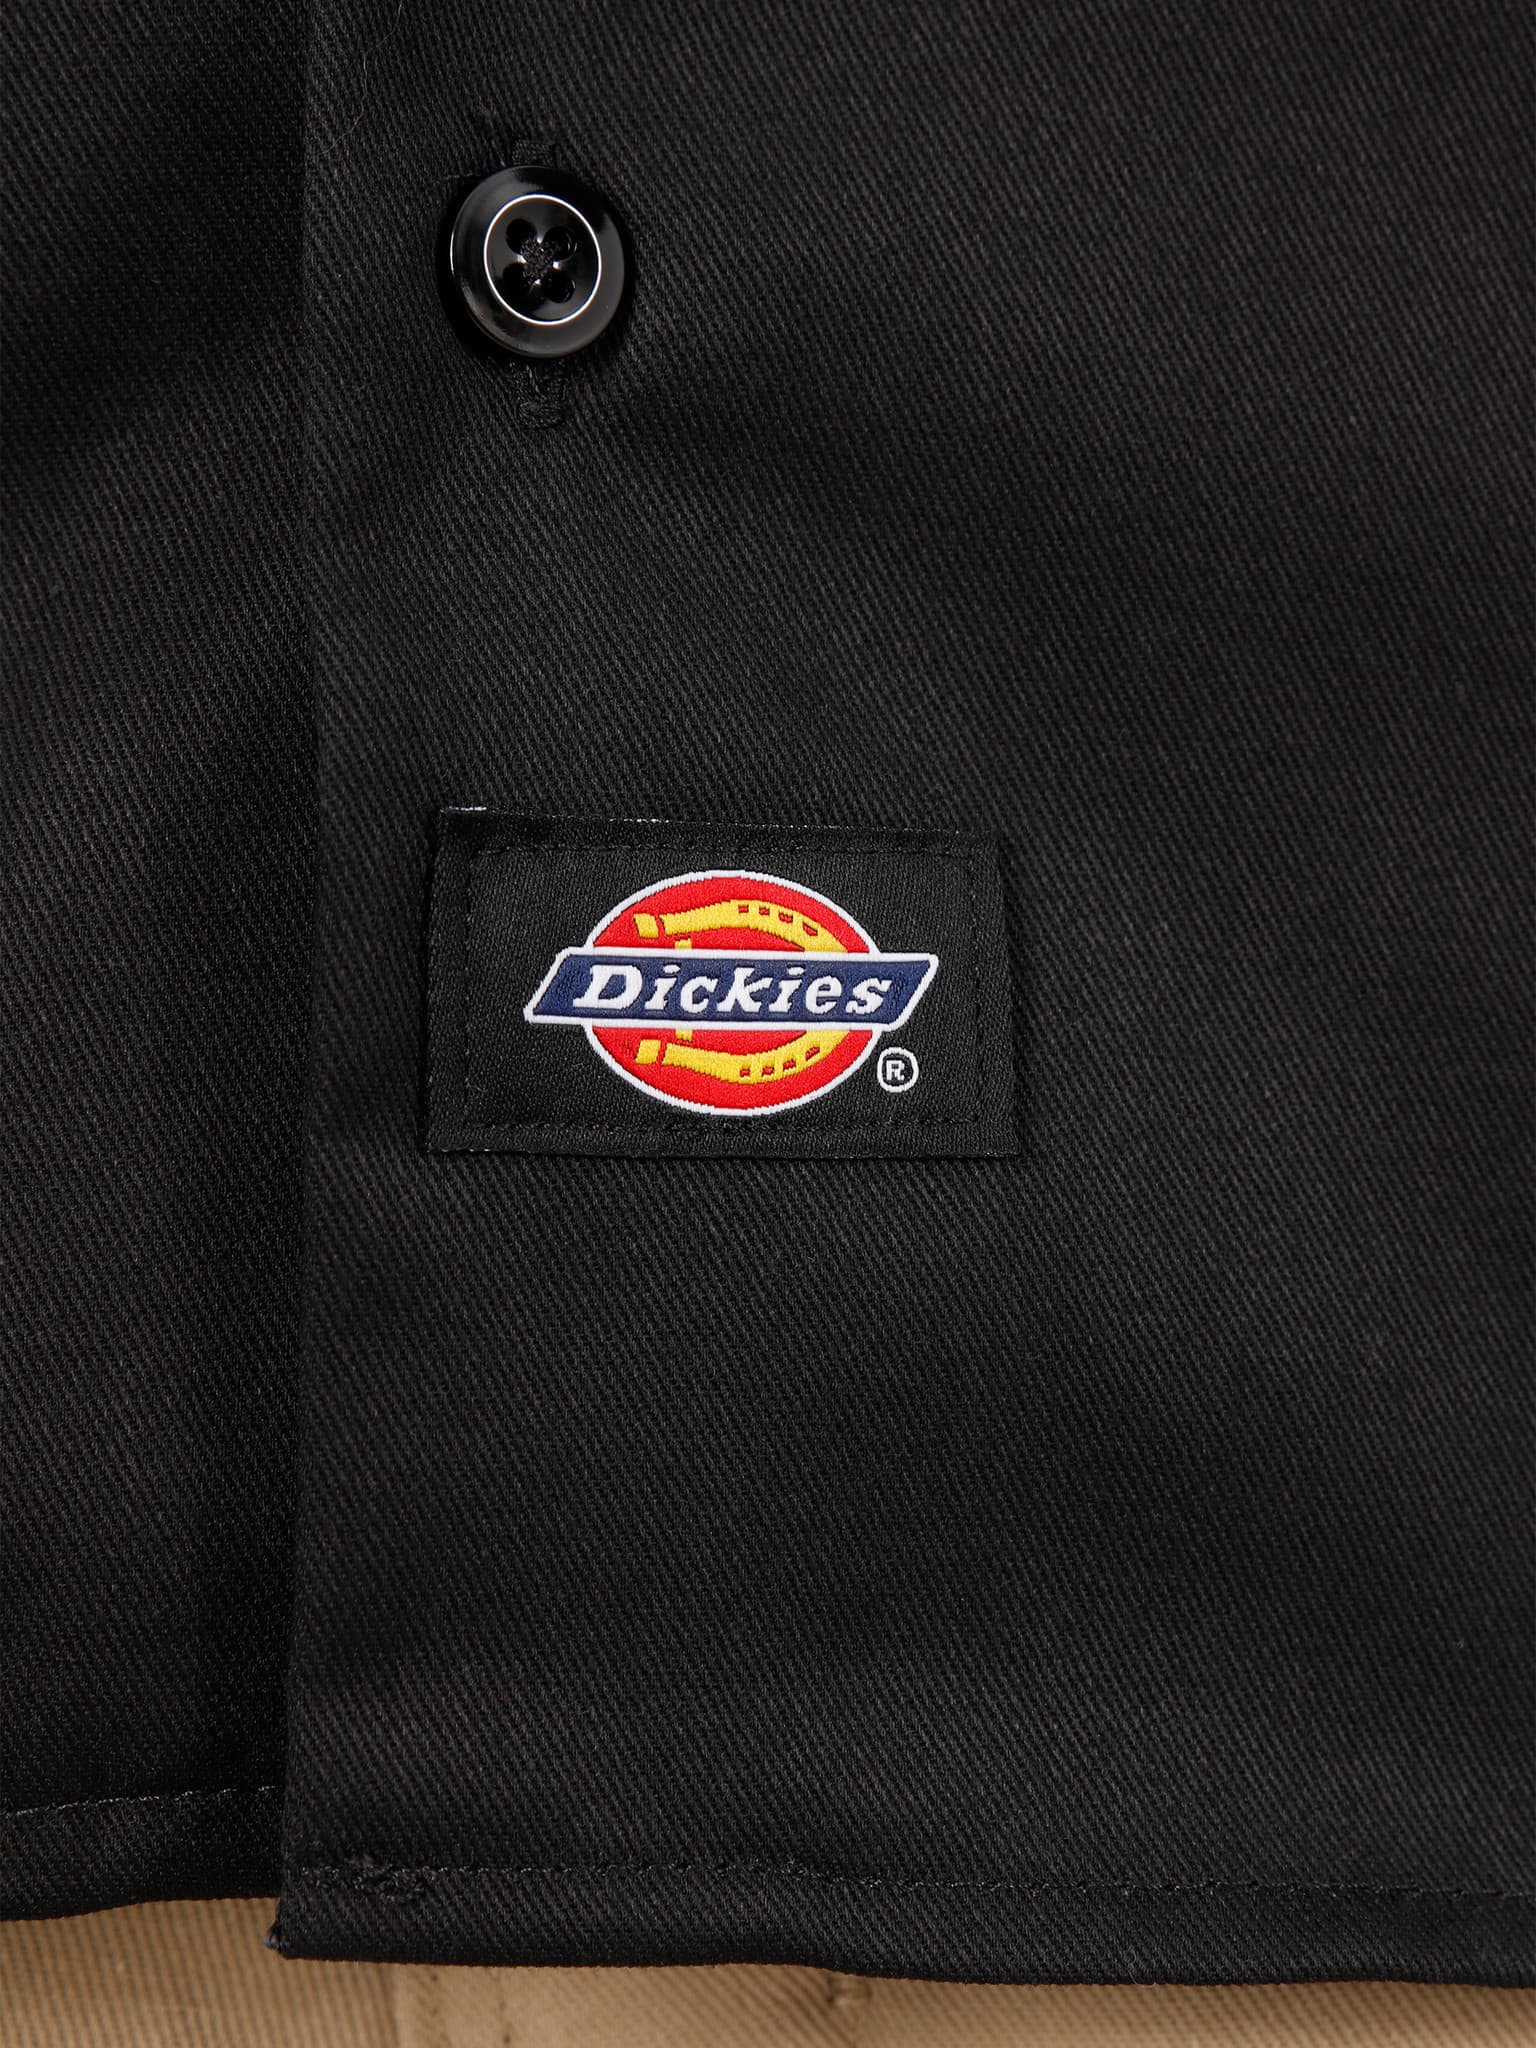 Short Sleeve Work Shirt Black DK001574BLK1